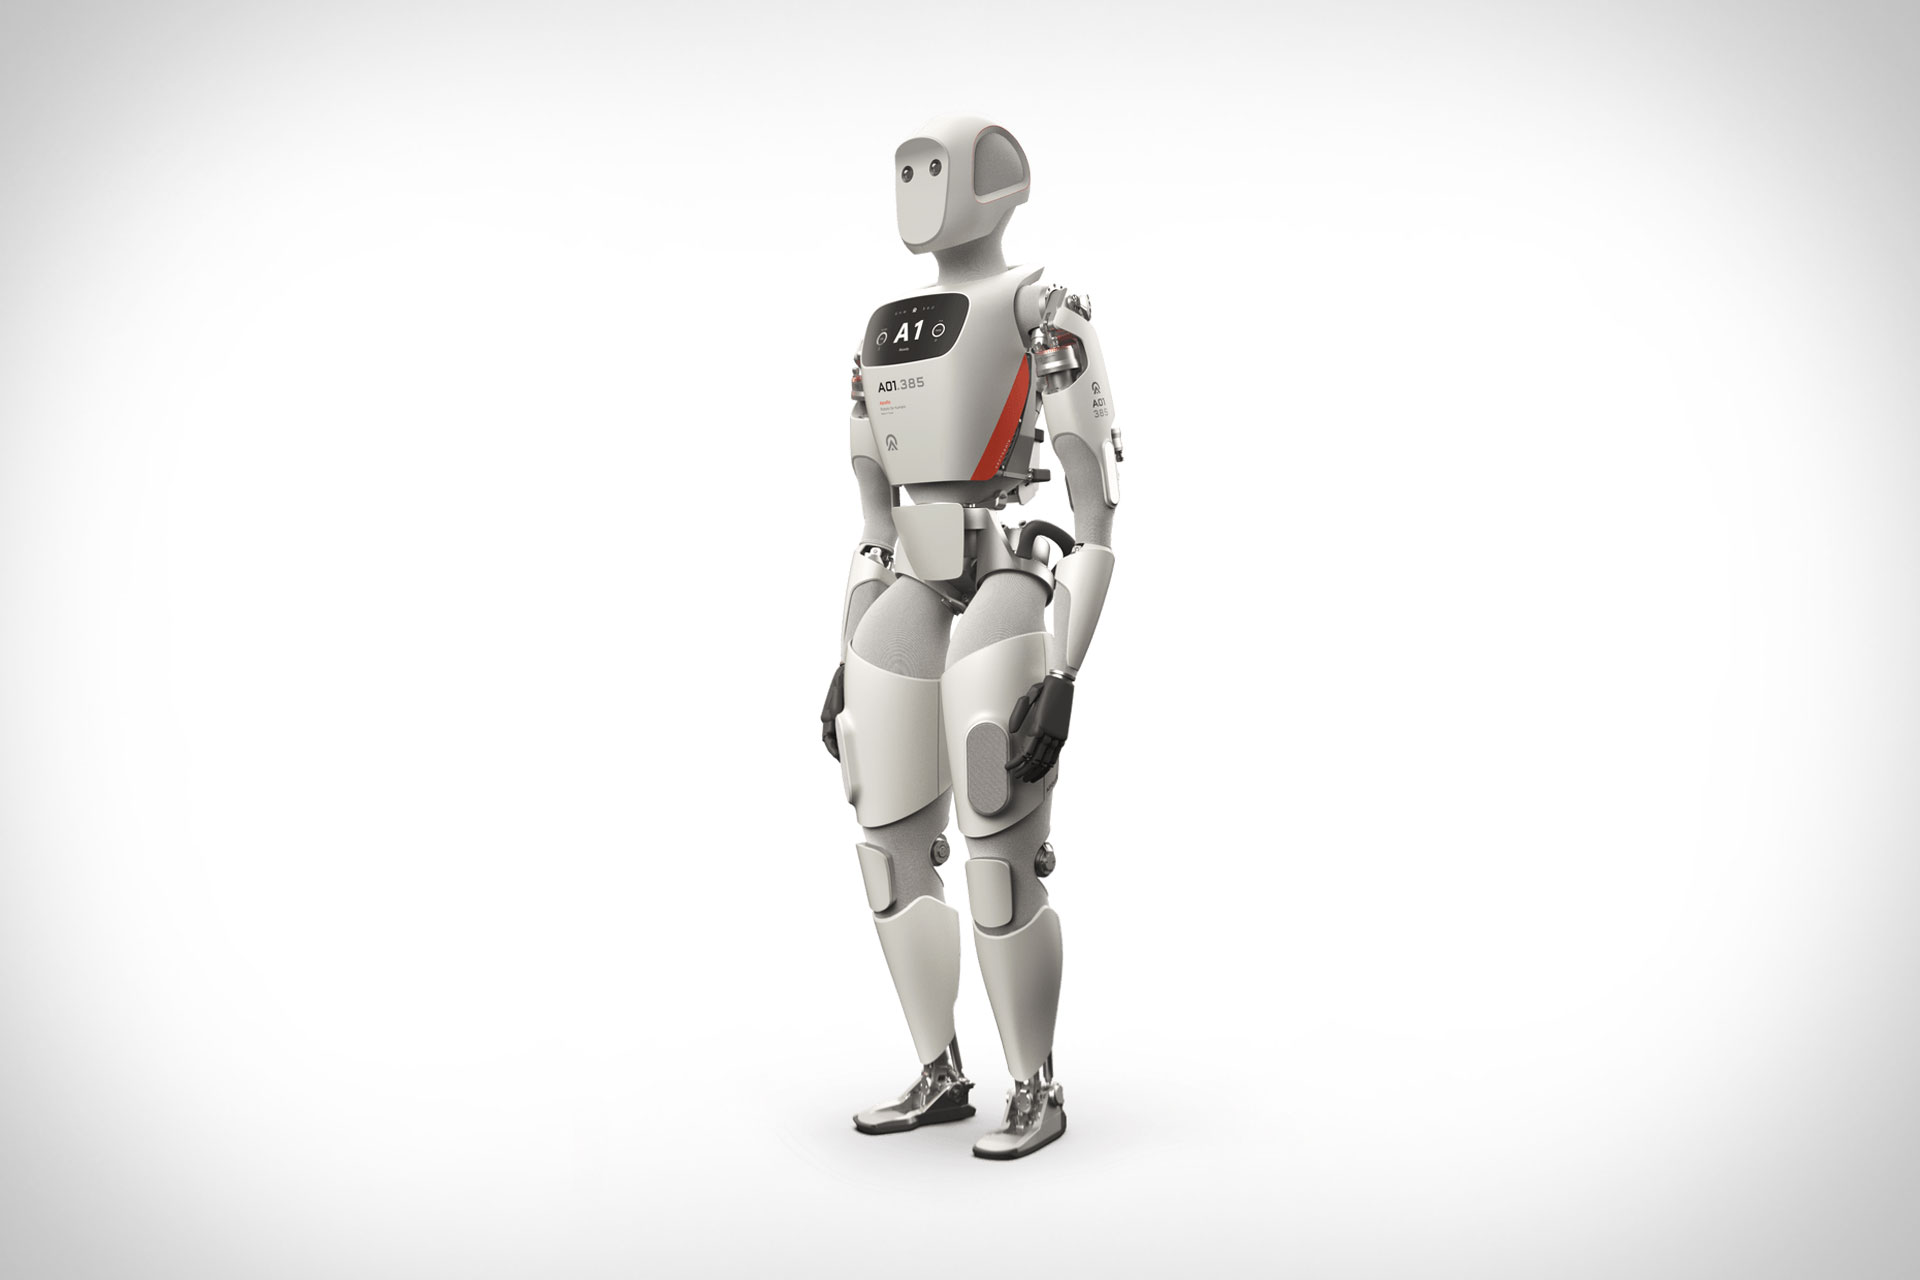 Apollo Humanoid Robot | Uncrate, #Apollo #Humanoid #Robot #Uncrate